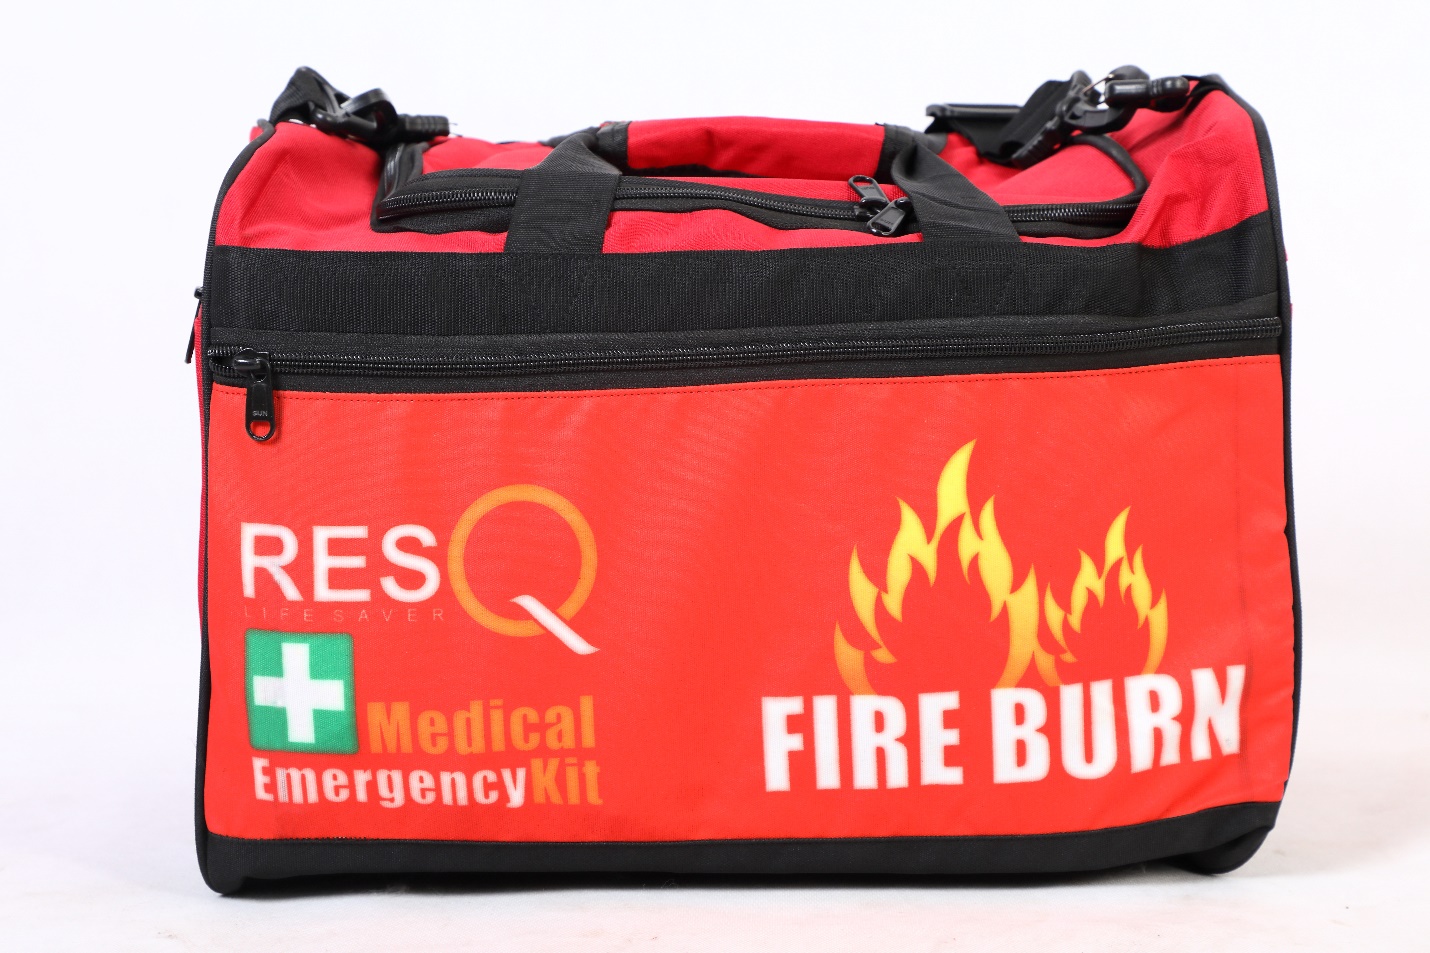  Fire Burn kit